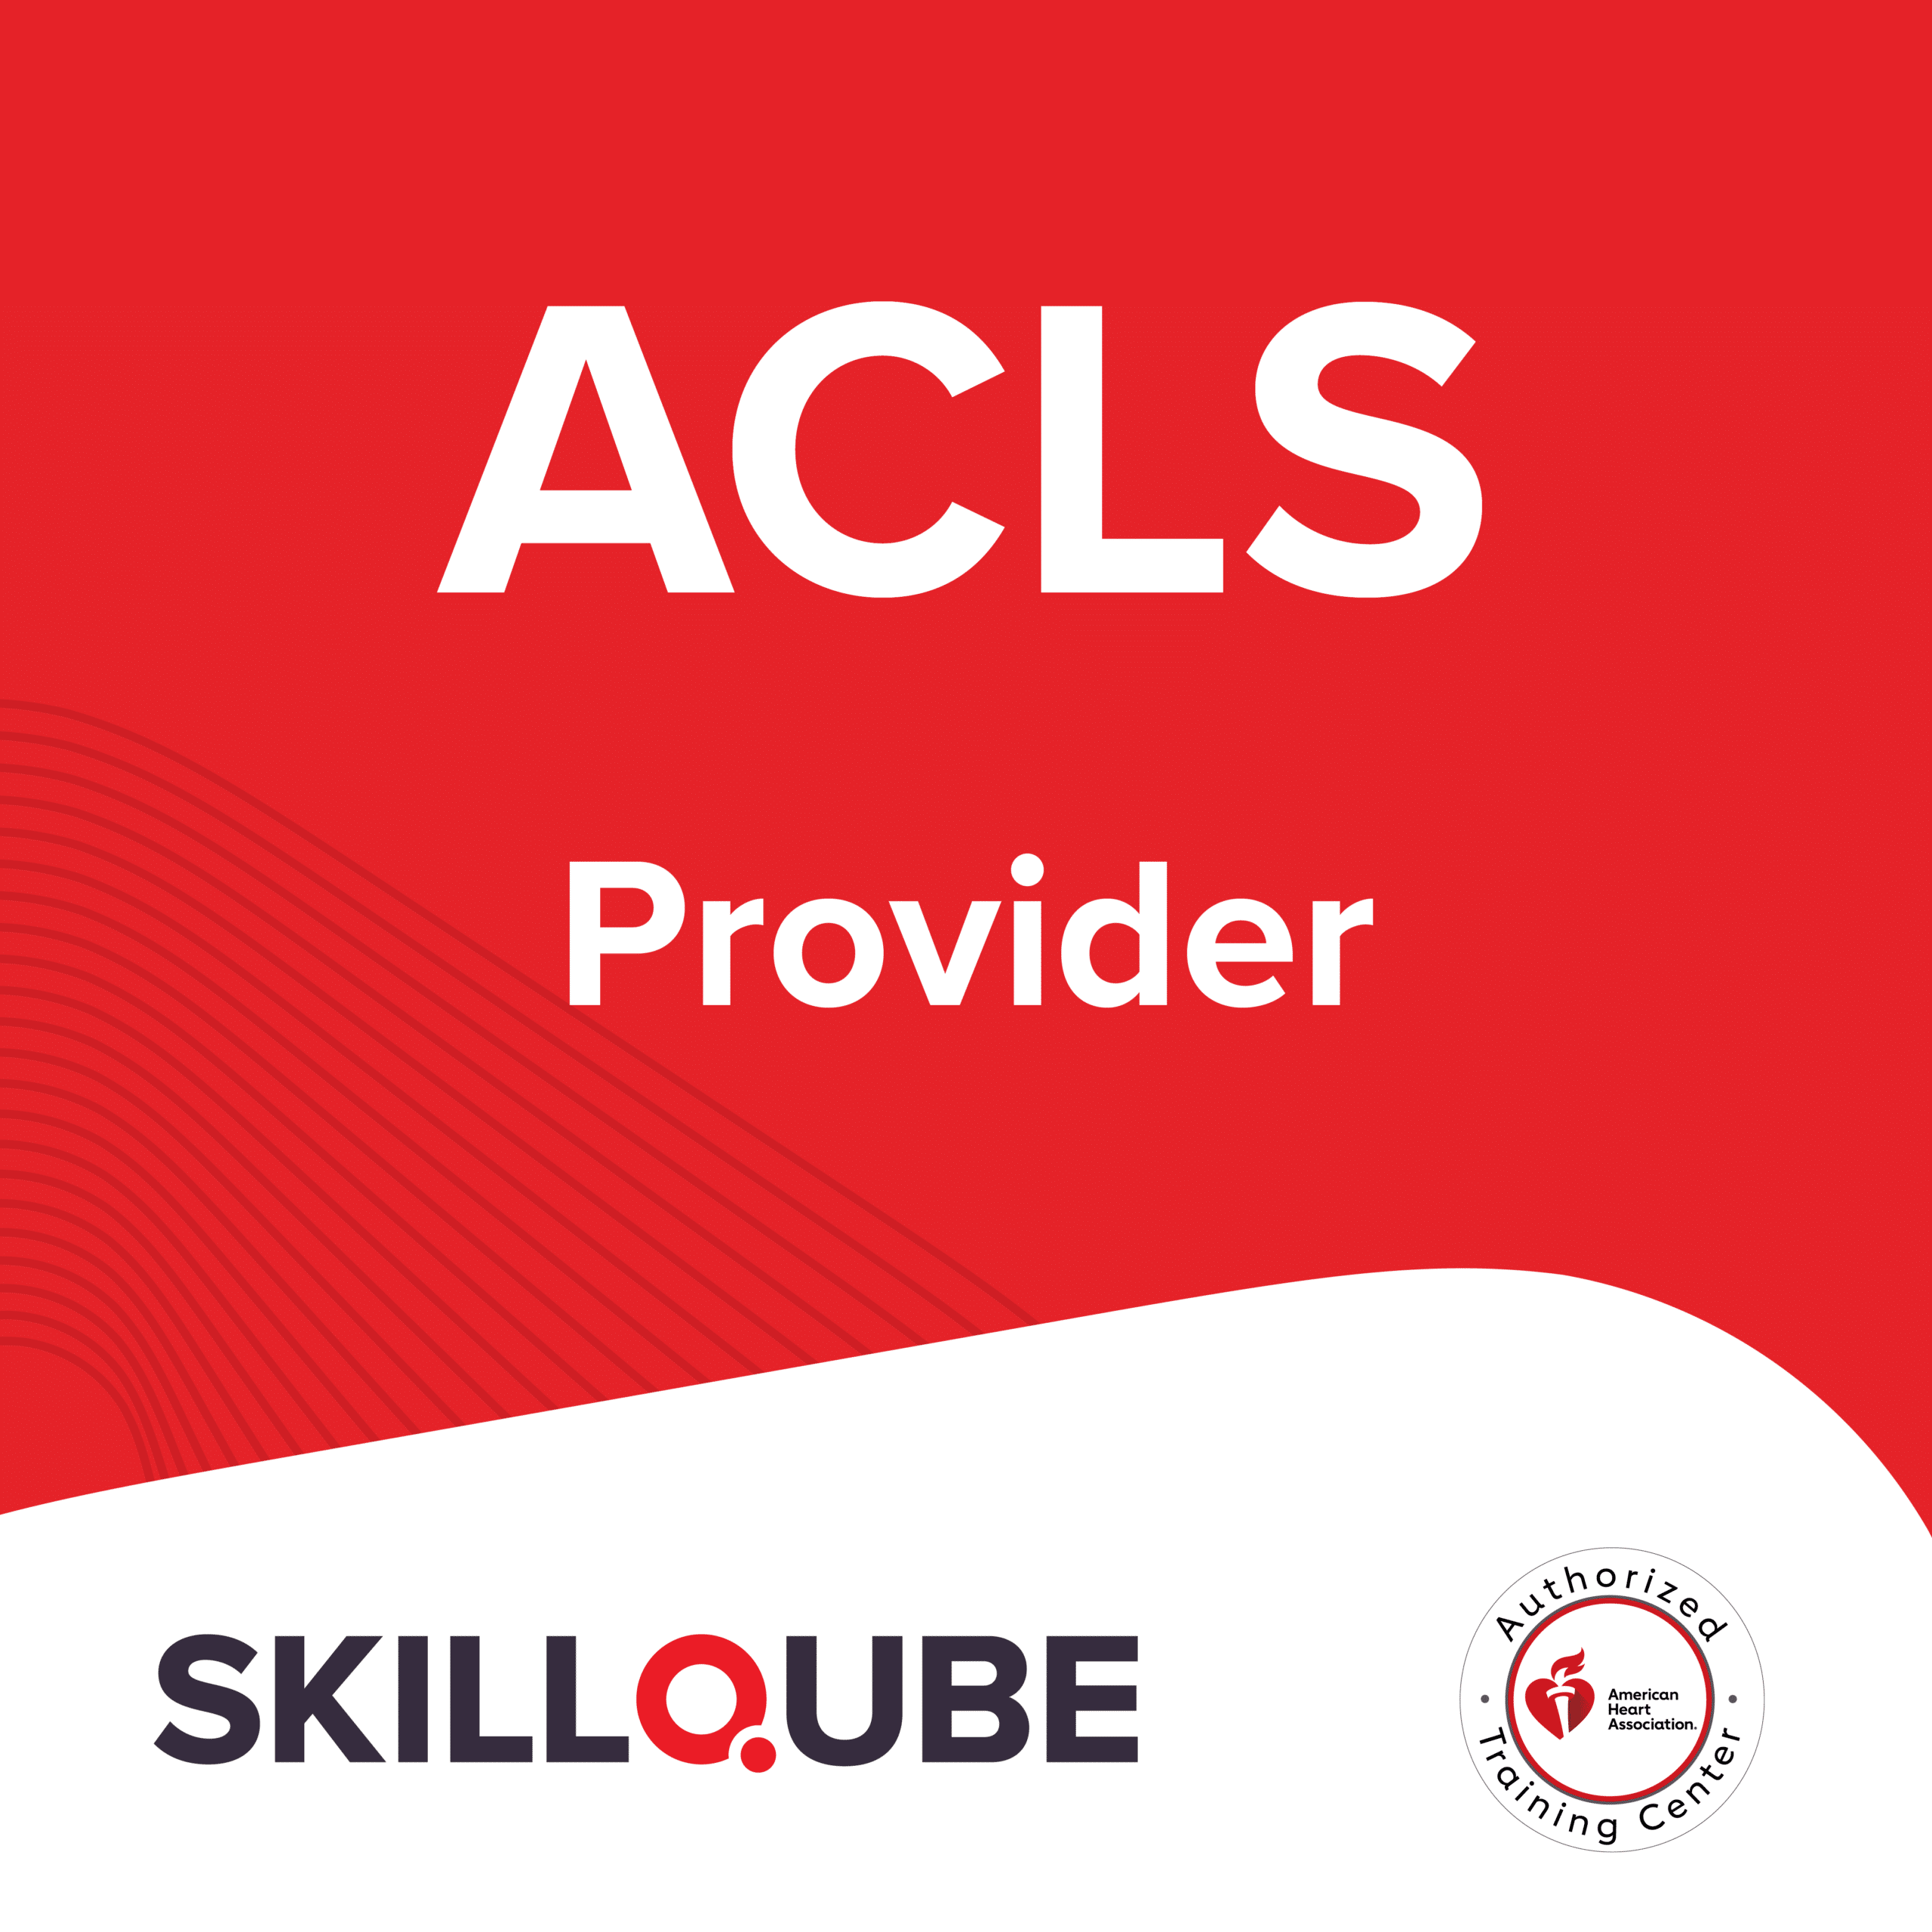 ACLS Provider